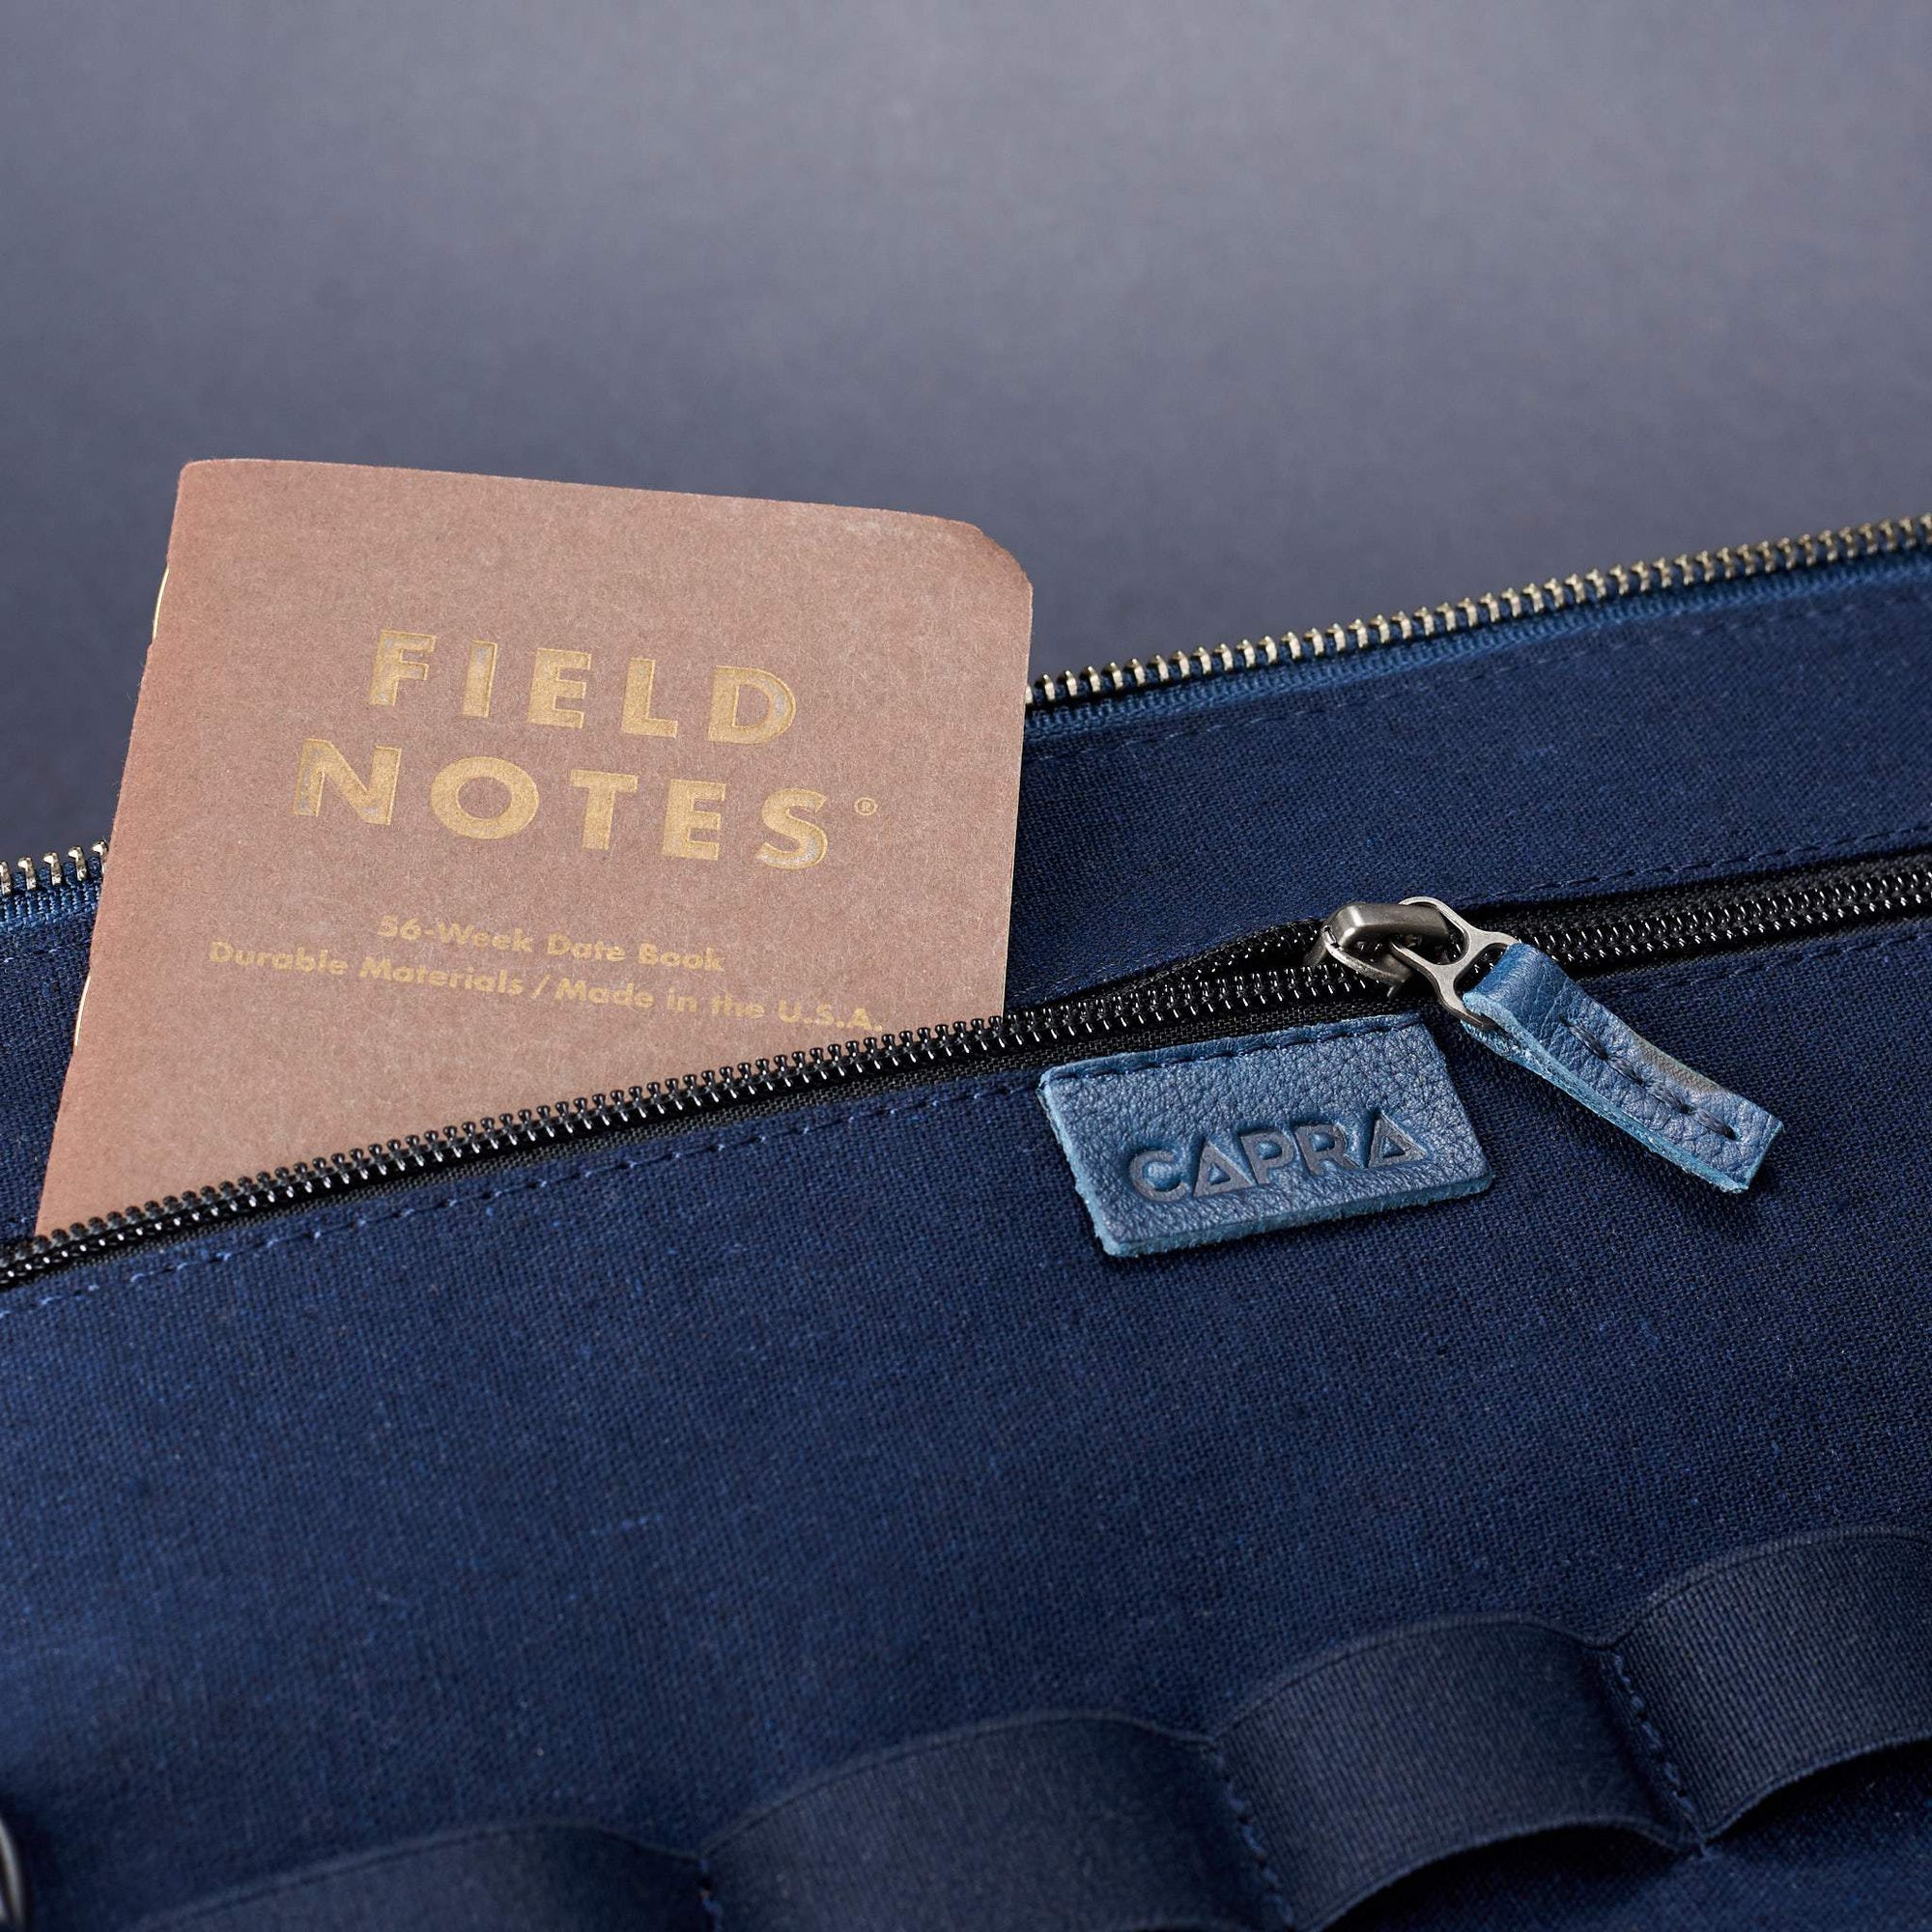 Interior zipper pocket. Best travel tech organizer navy blue by Capra Leather